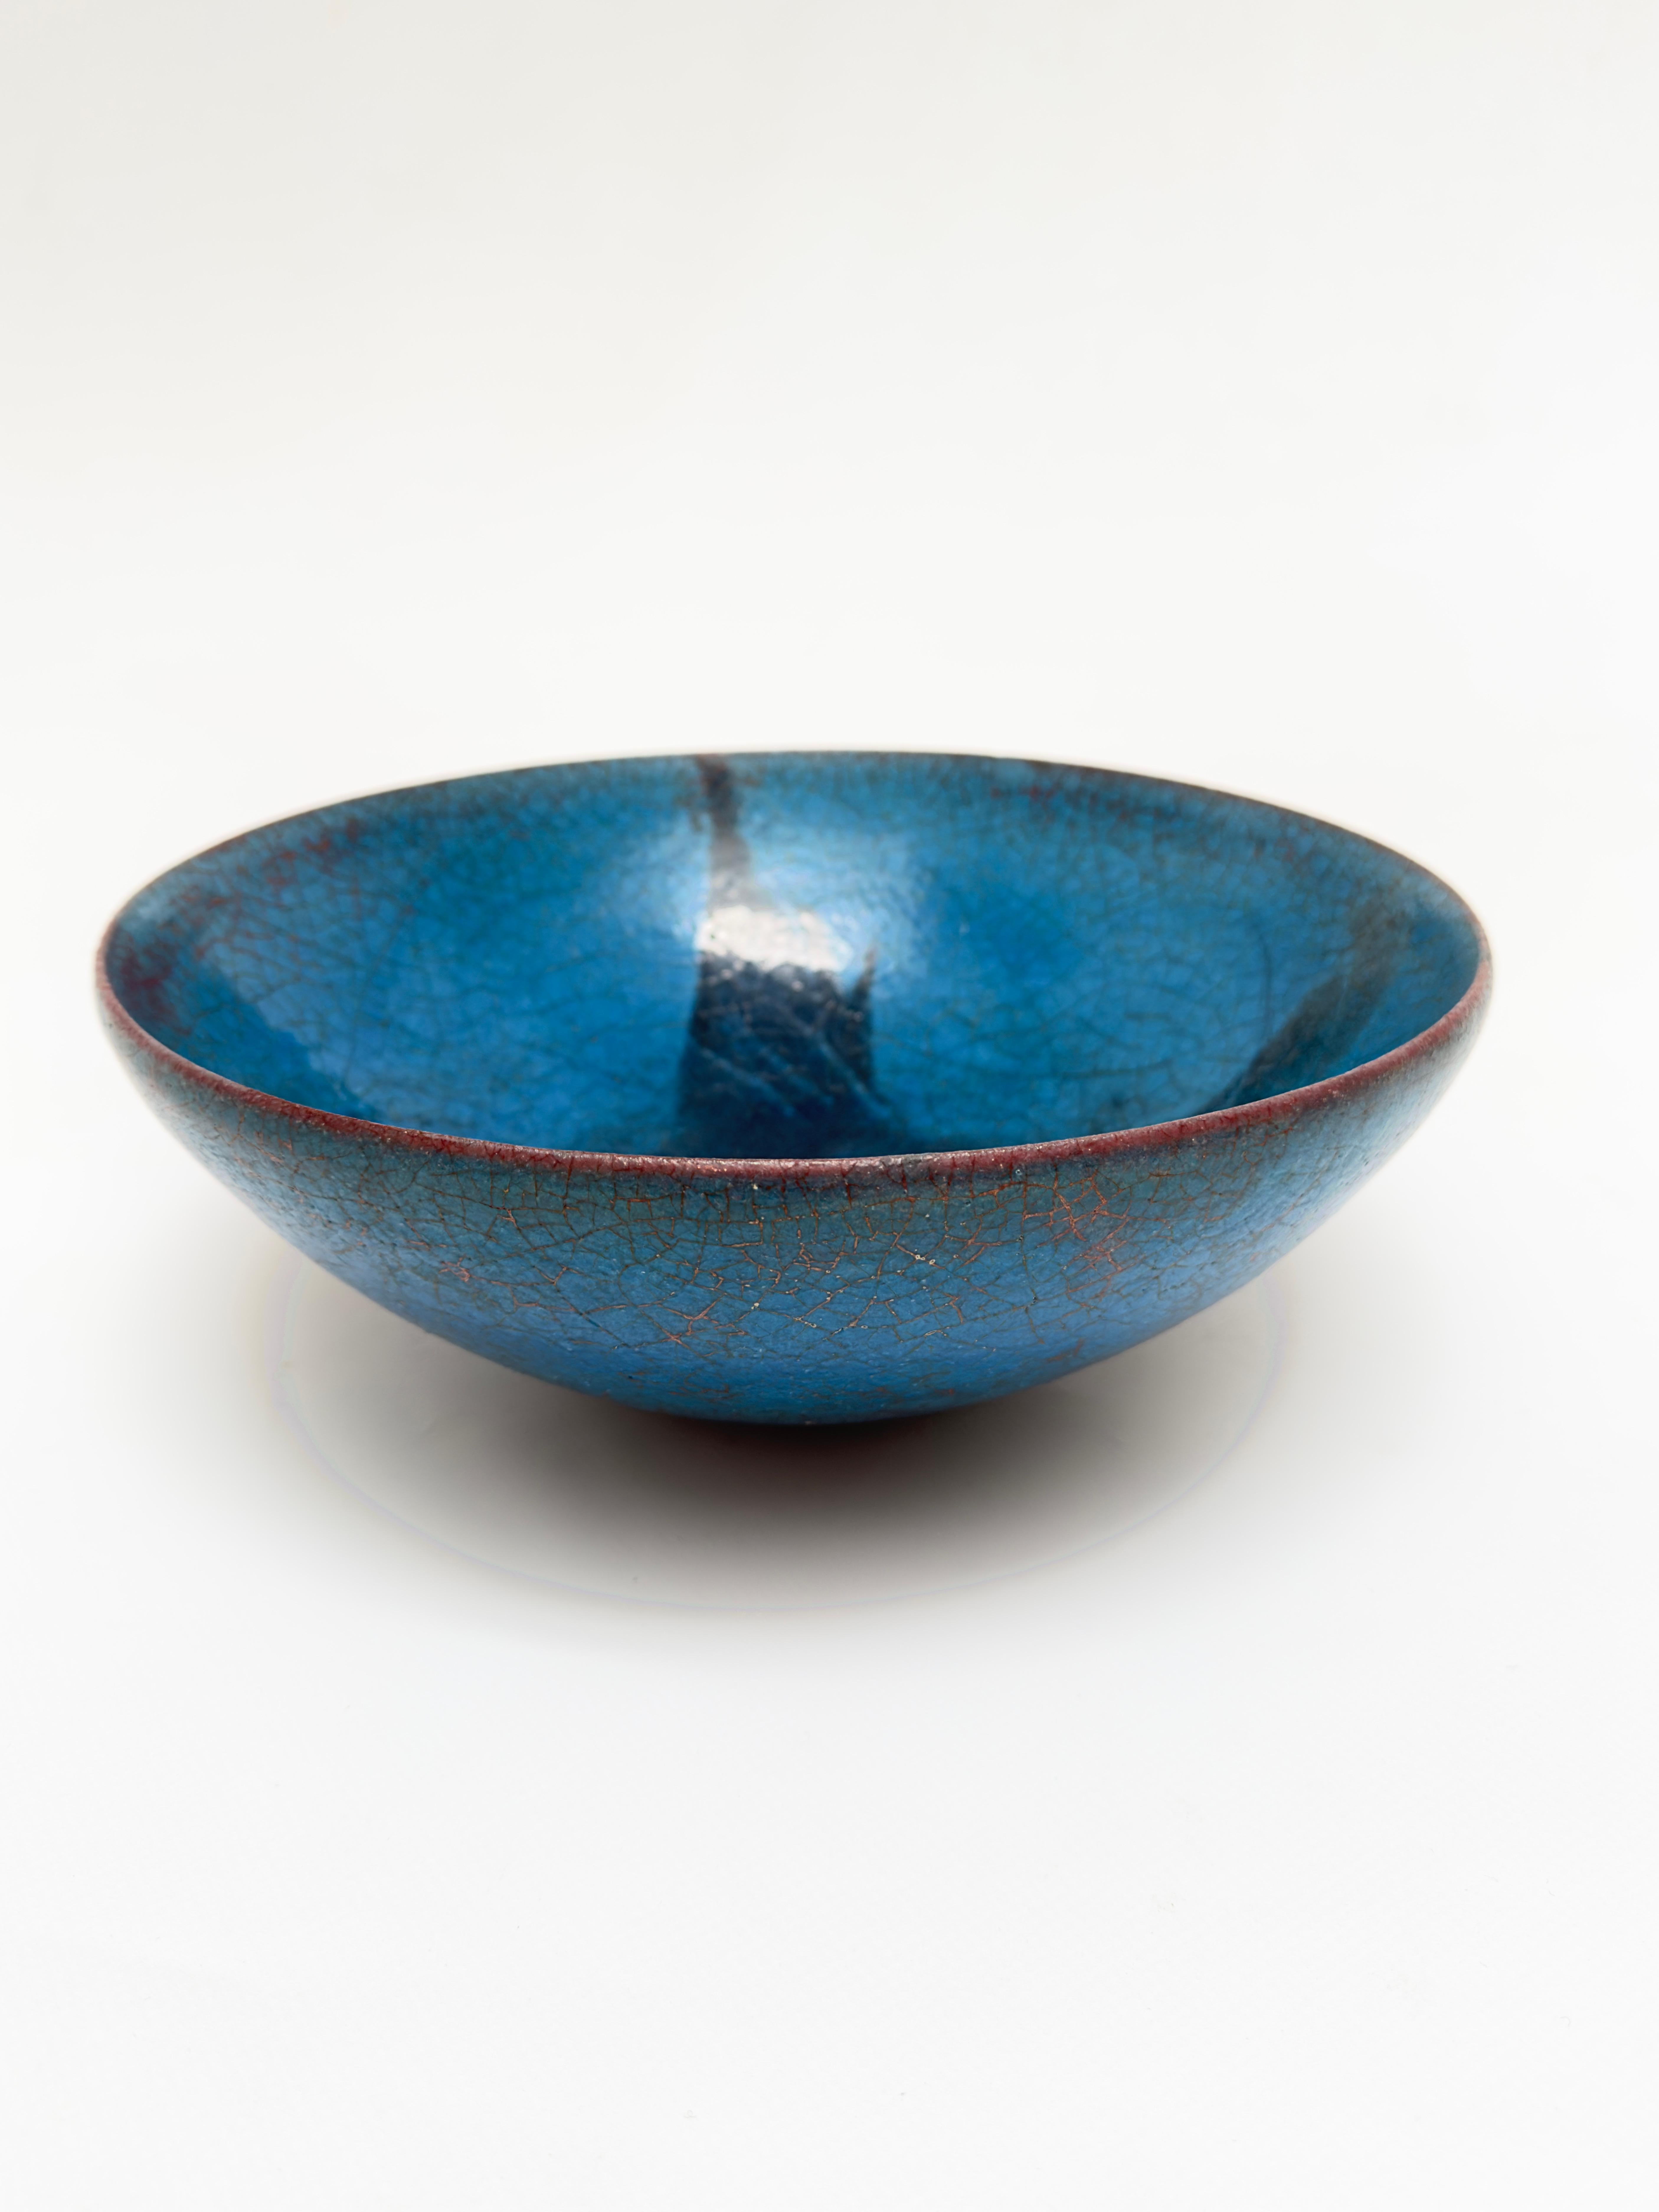 Decorative Ceramic Bowl, Carlo Zauli, Italy c. 1960 In Good Condition For Sale In St Ouen, FR